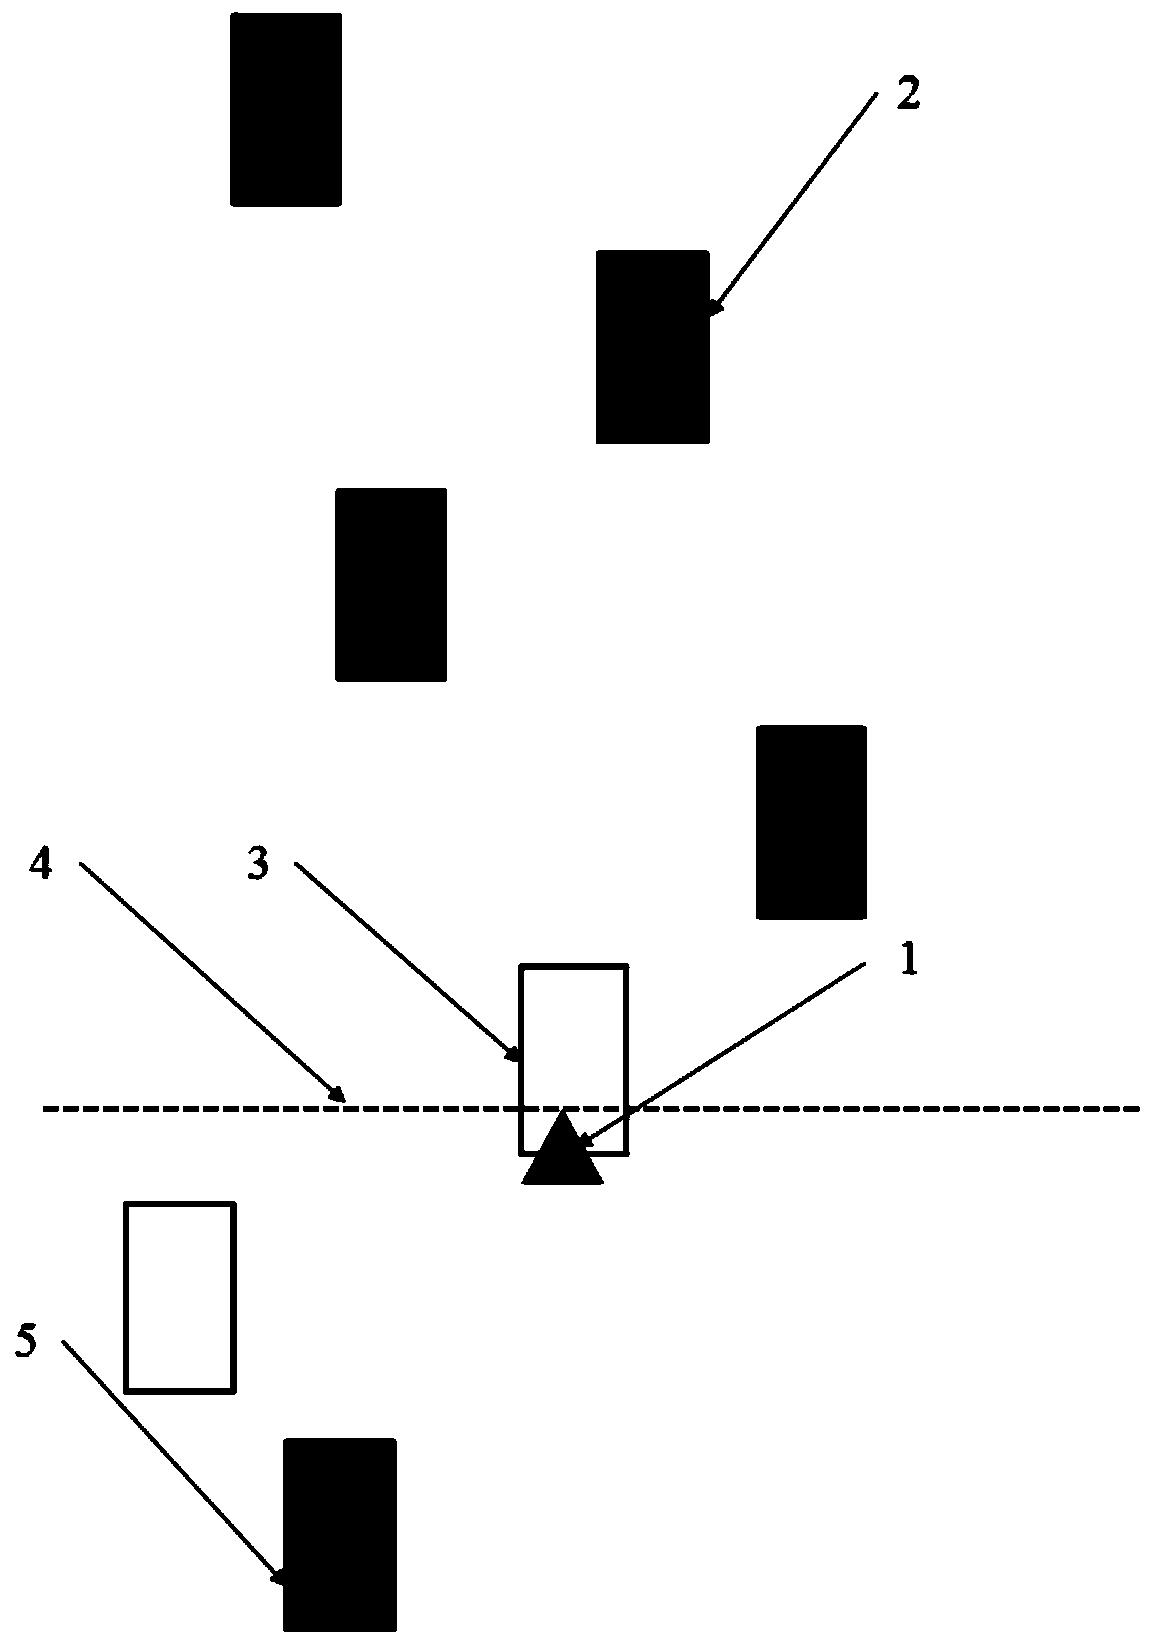 Variable inclination angle standing balance analysis system based on visual feedback, and method